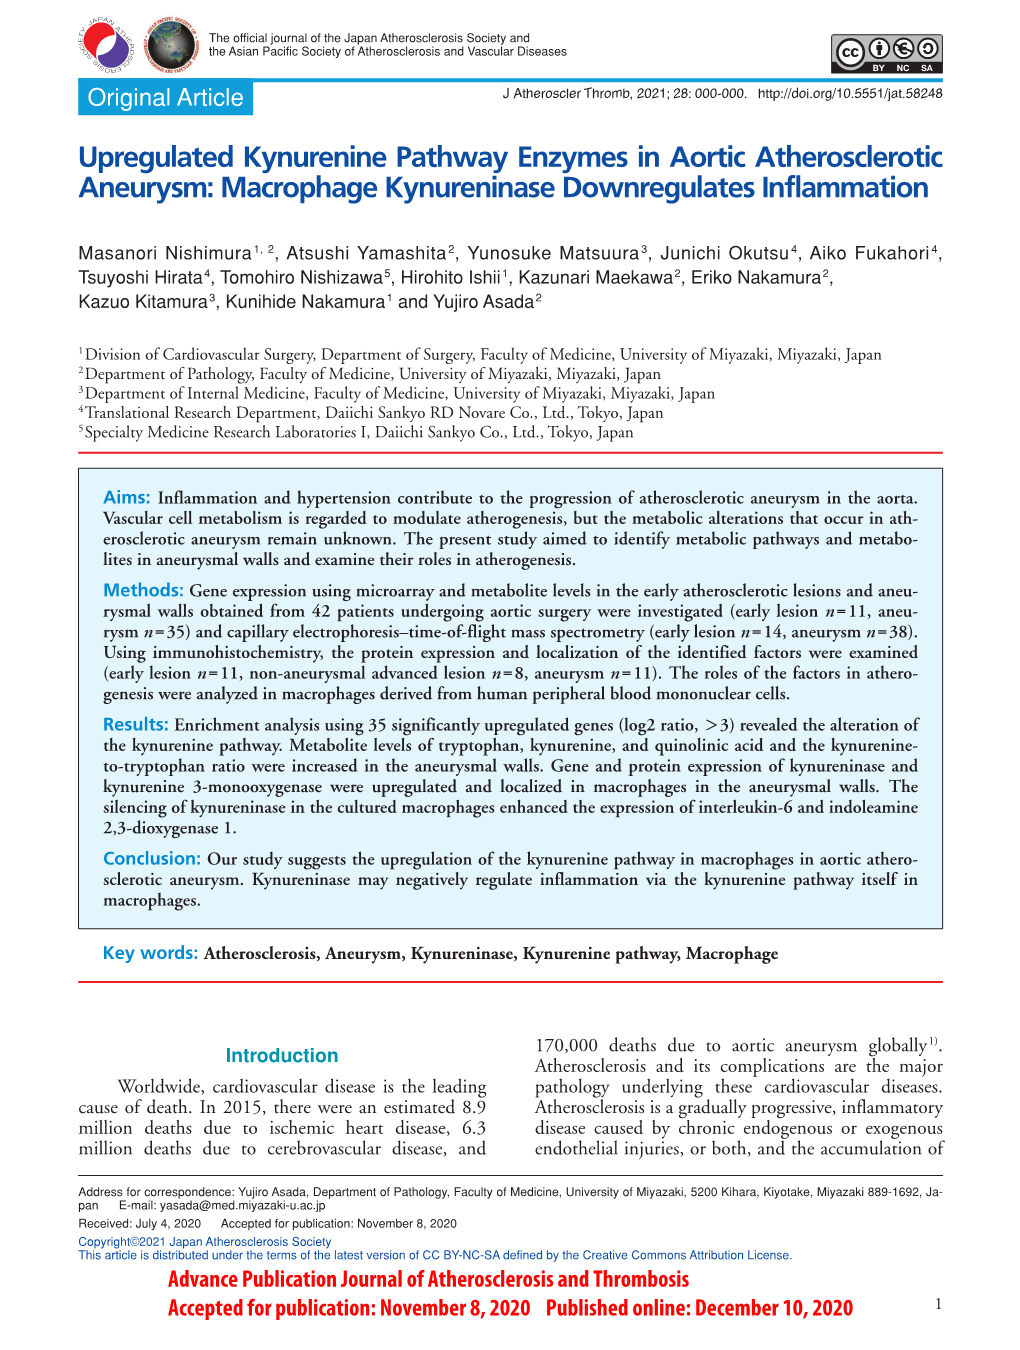 Upregulated Kynurenine Pathway Enzymes in Aortic Atherosclerotic Aneurysm: Macrophage Kynureninase Downregulates Inflammation